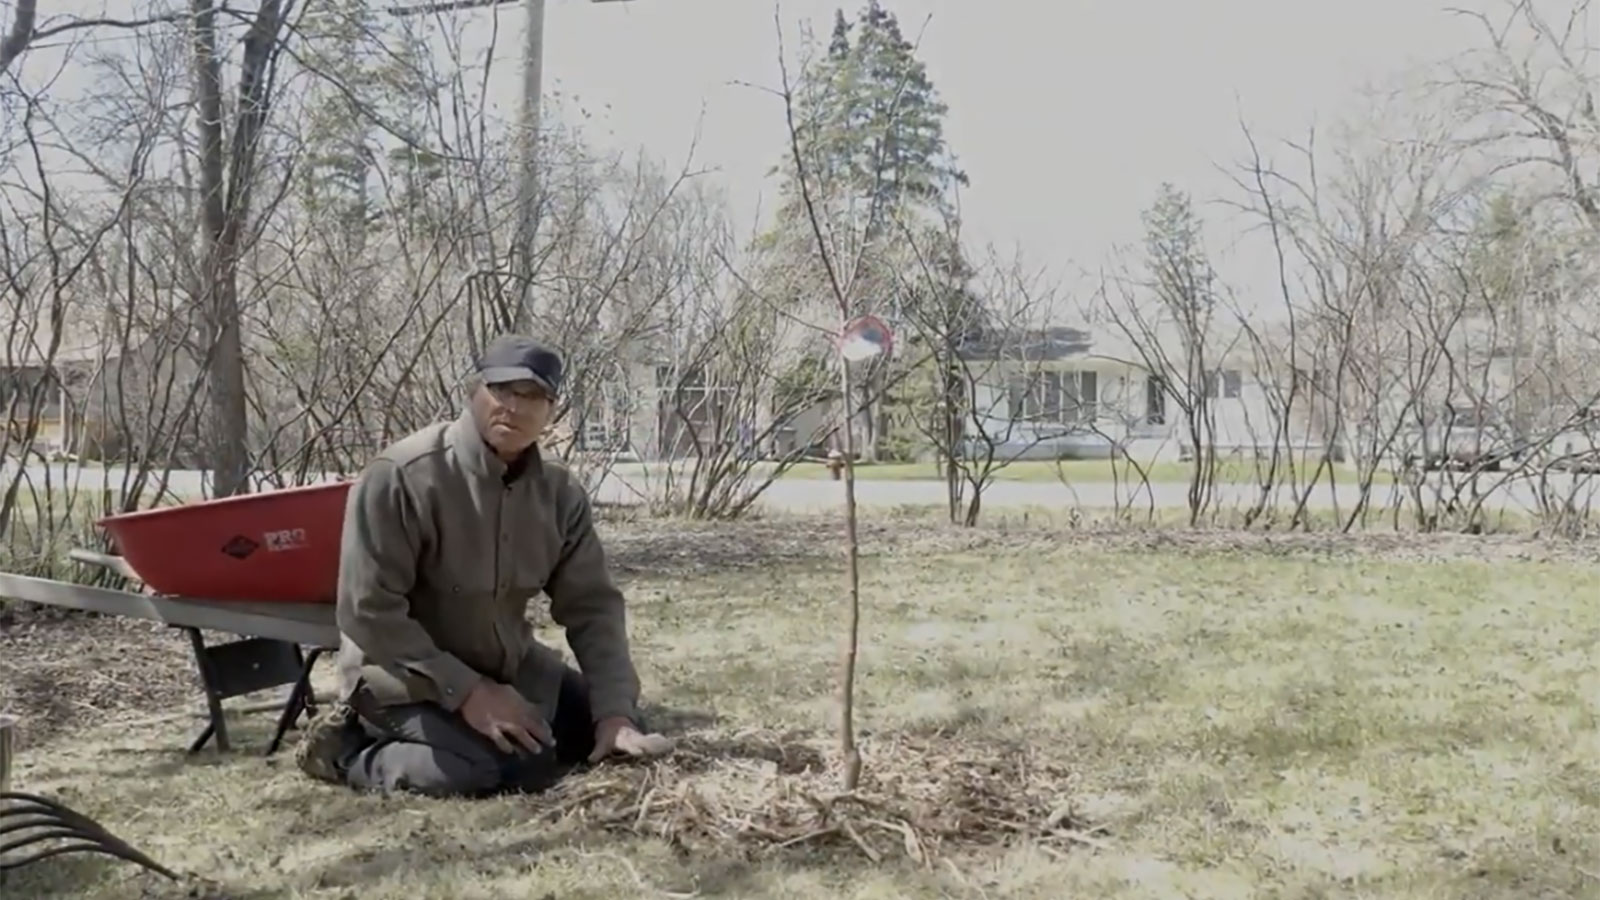 tree-planting-video-poster.jpg (248 KB)